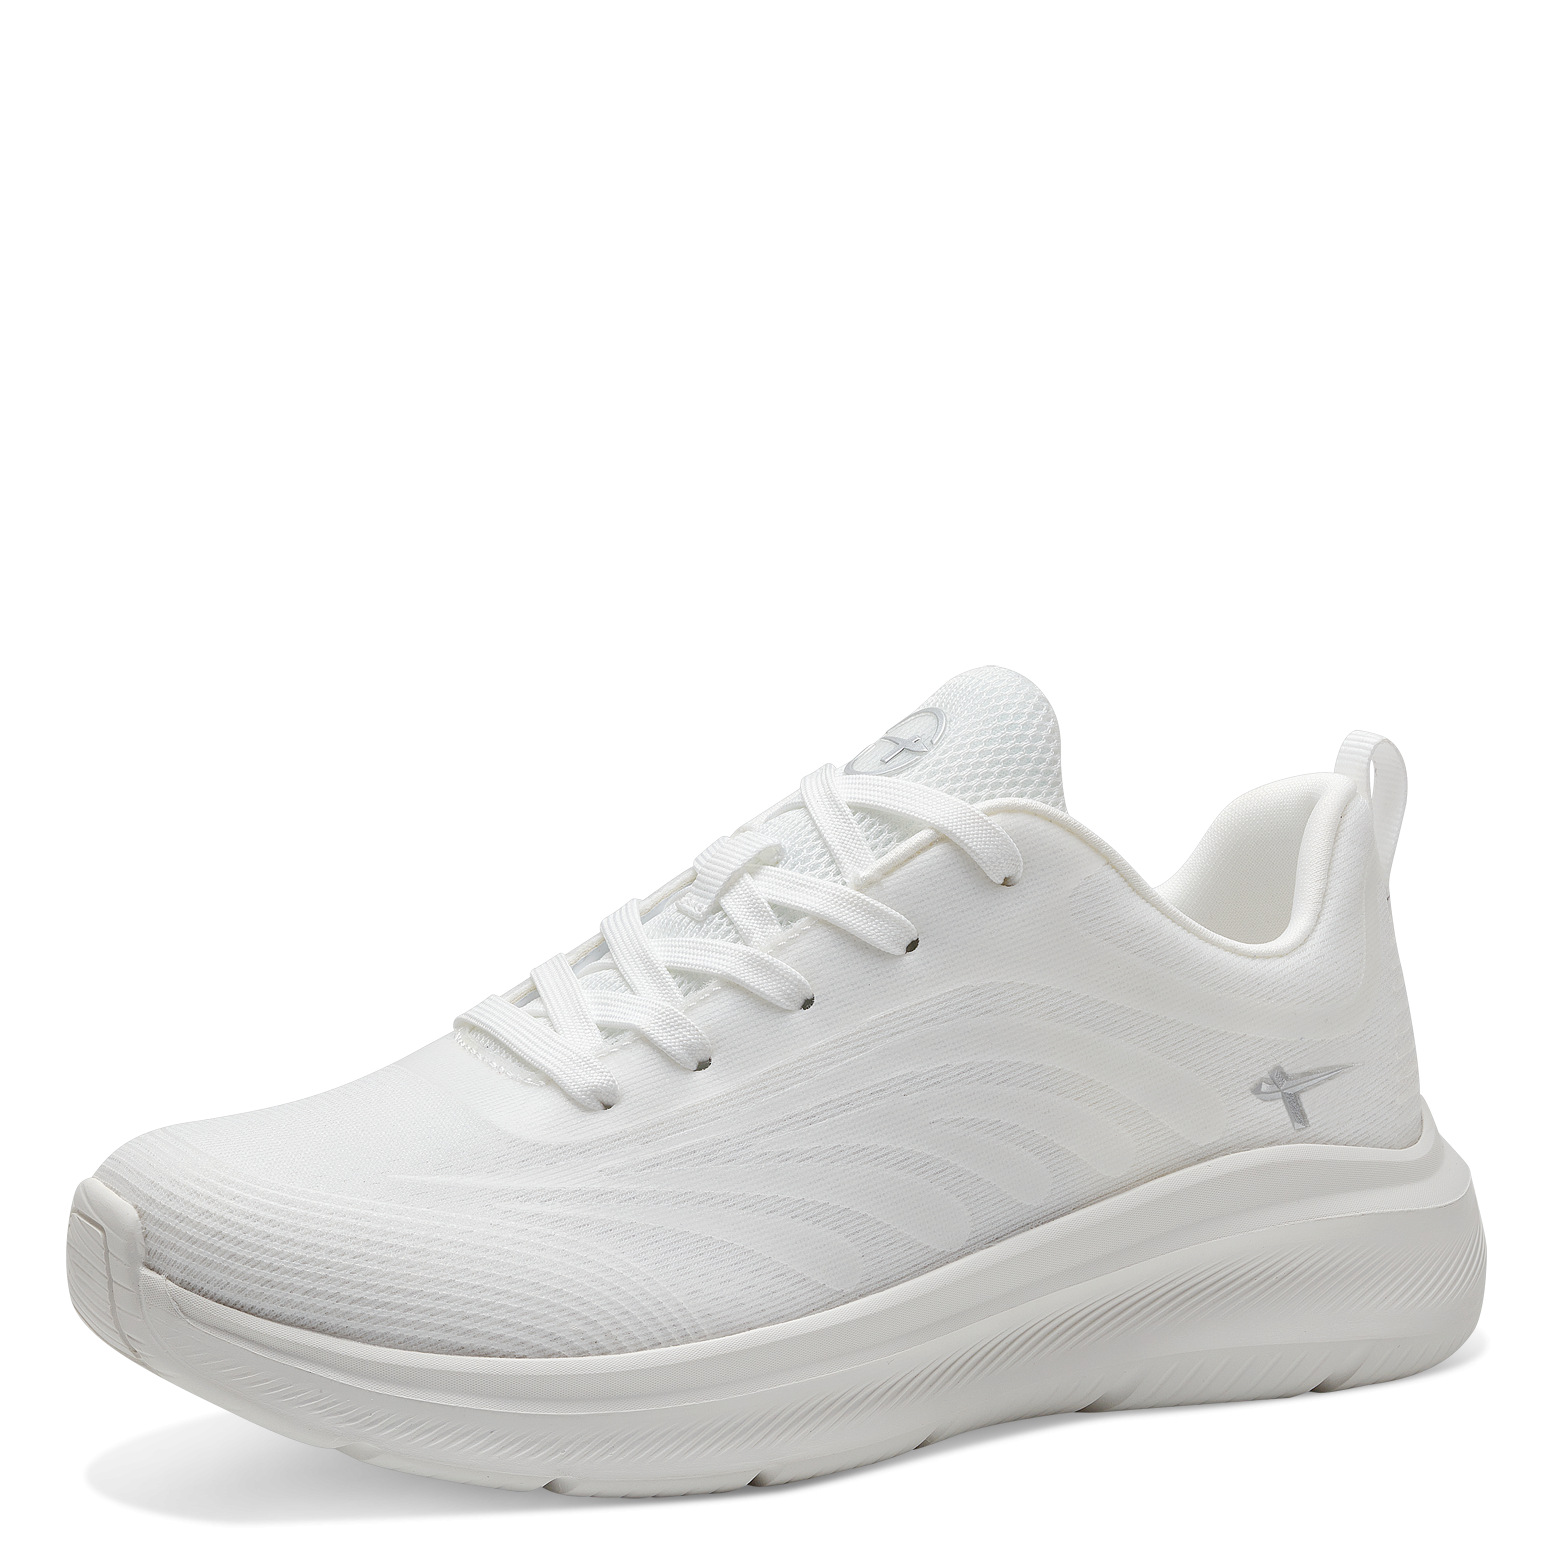 Tamaris Comfort Sneaker - Weiß Textil/Synthetik